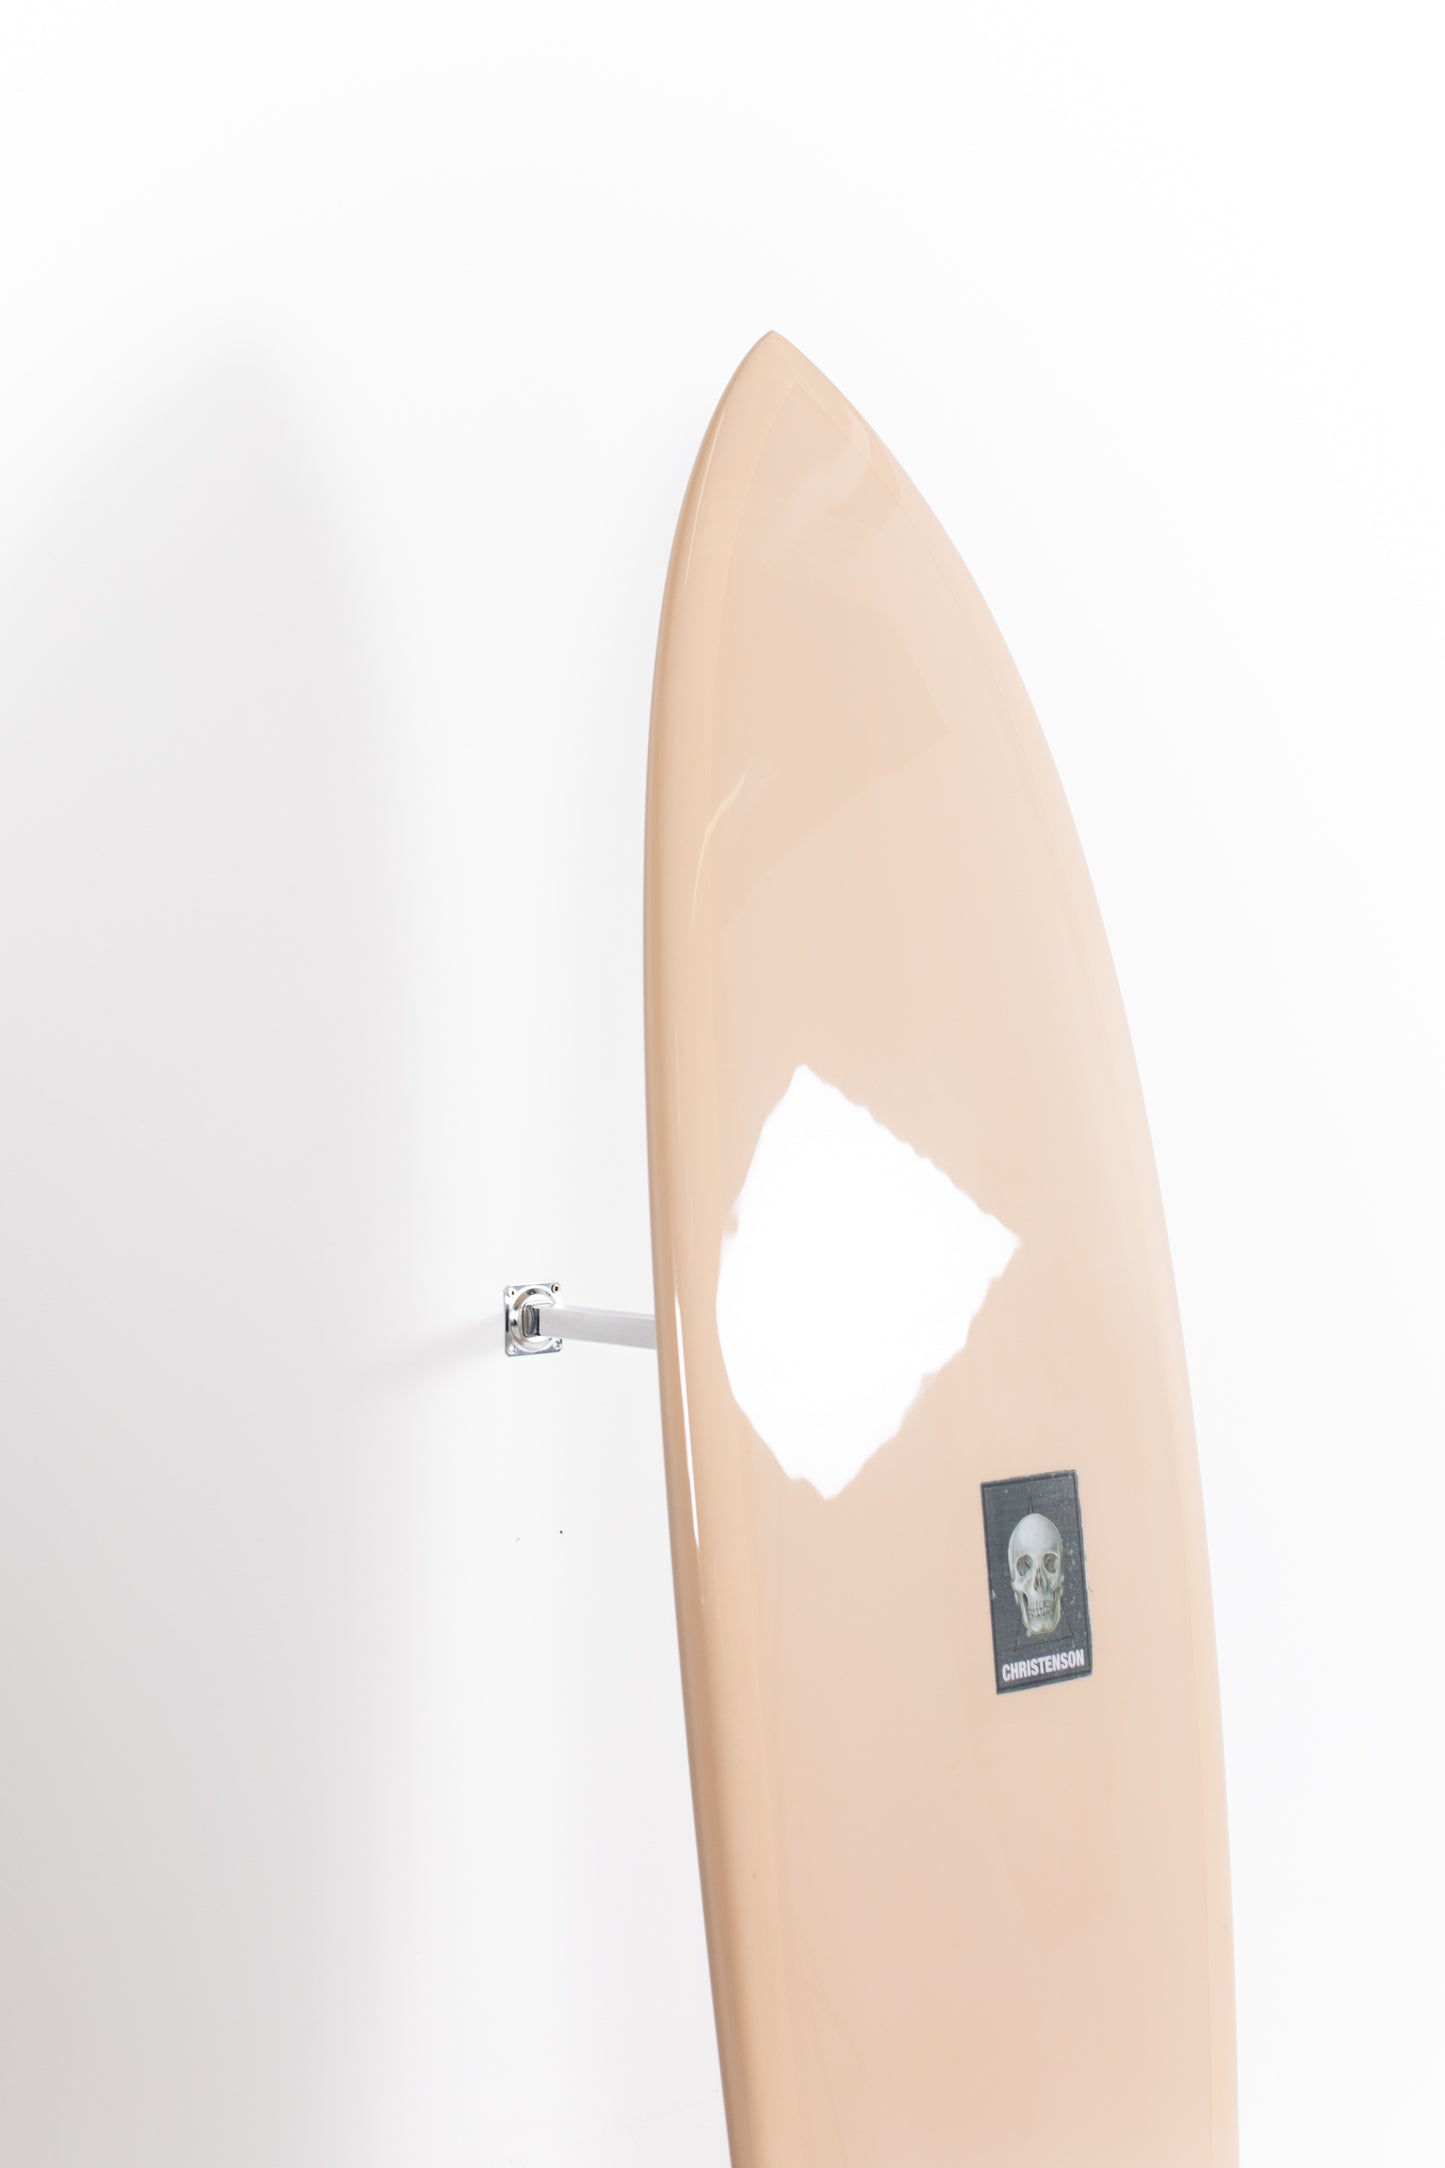 
                  
                    Pukas Surf Shop - Christenson Surfboards - LONG PHISH - 6'8" x 20 3/4 x 2 9/16 - CX04670
                  
                